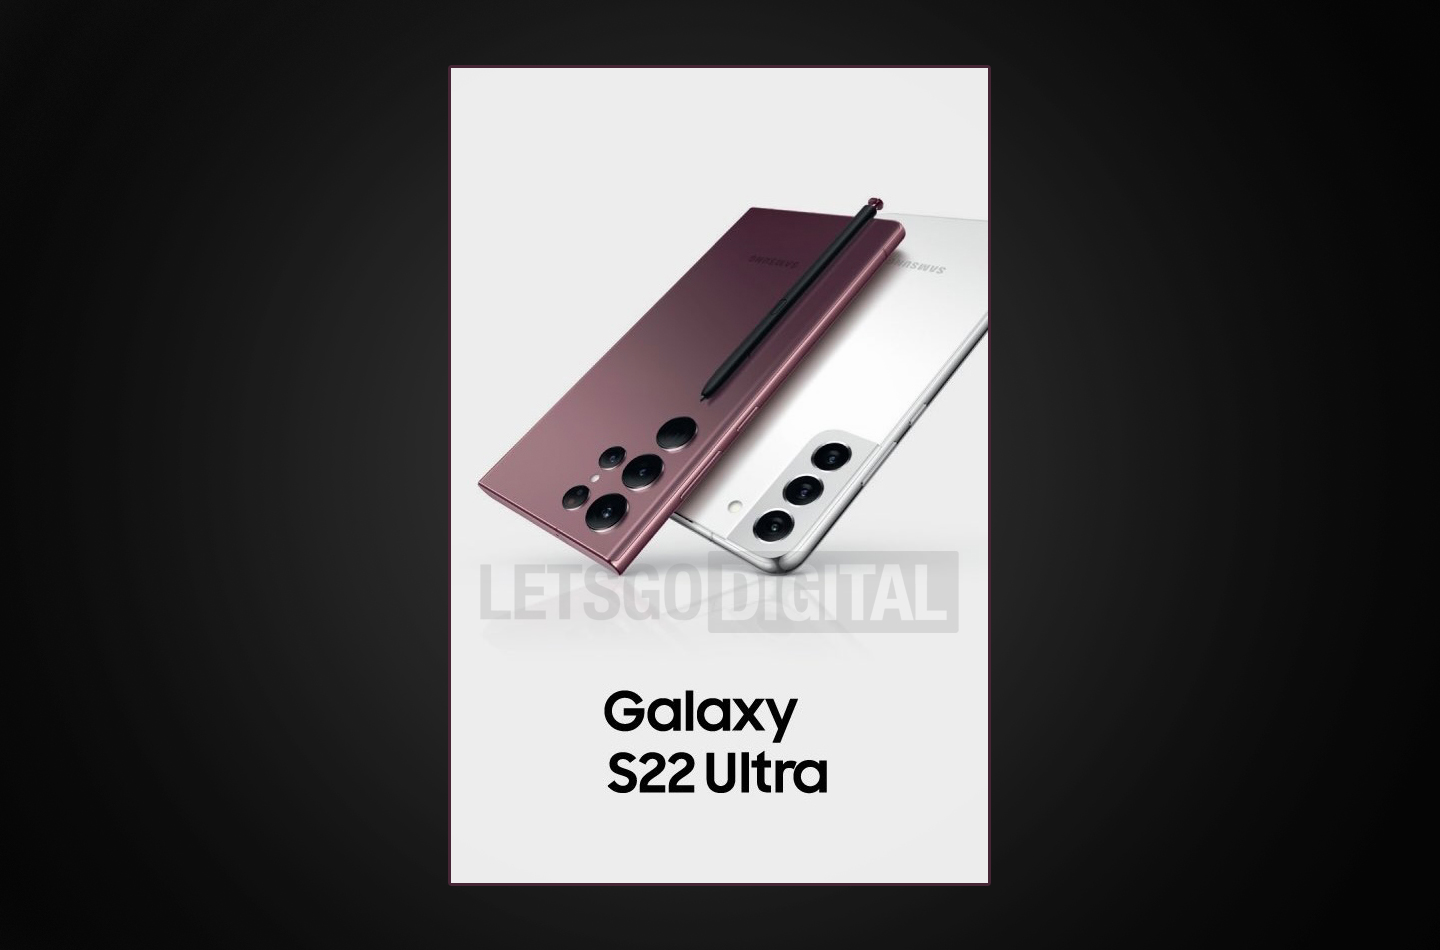 Galaxy S22 Ultra press image